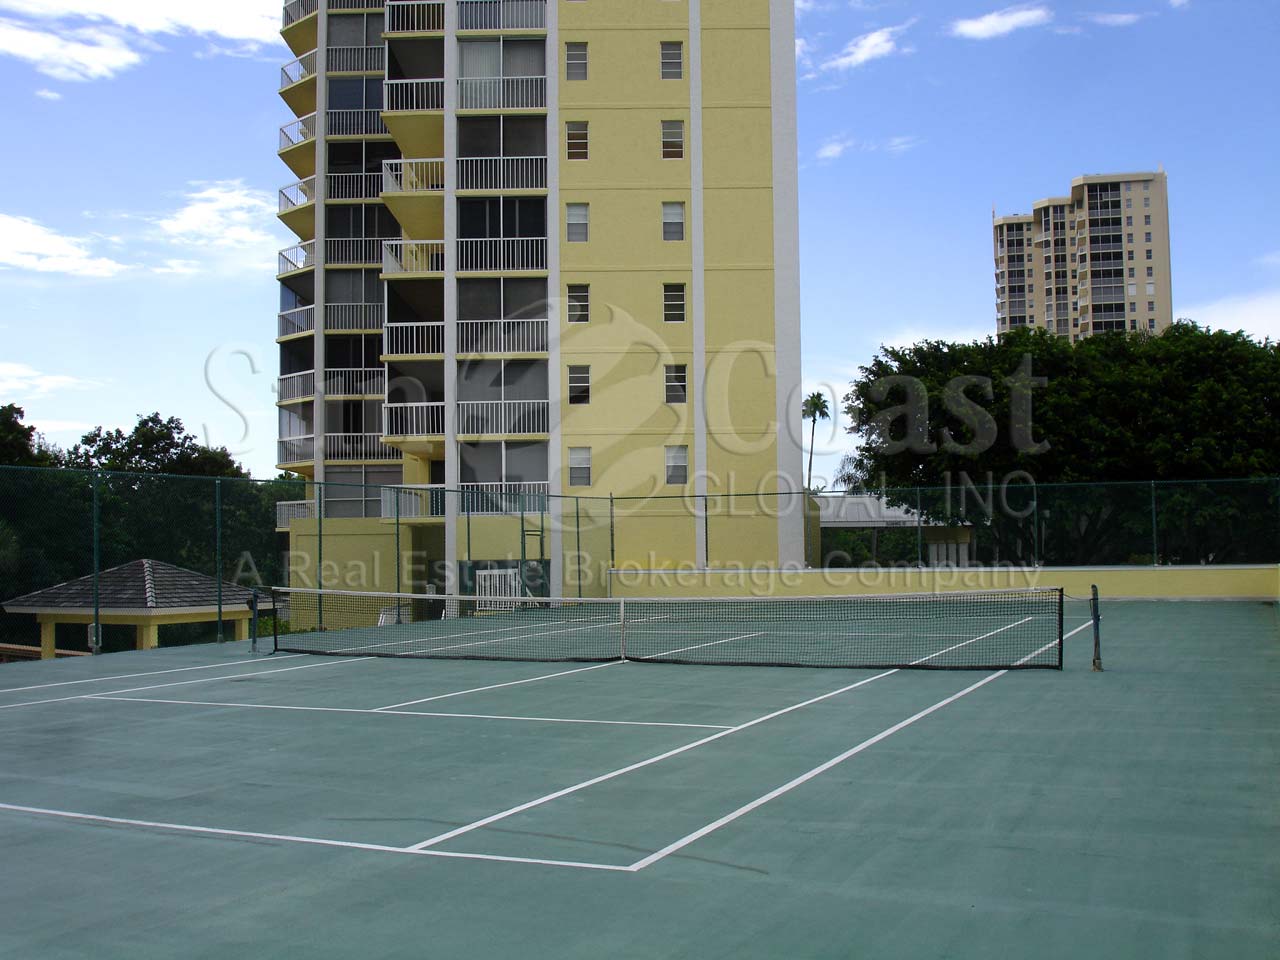 St Tropez Tennis Courts